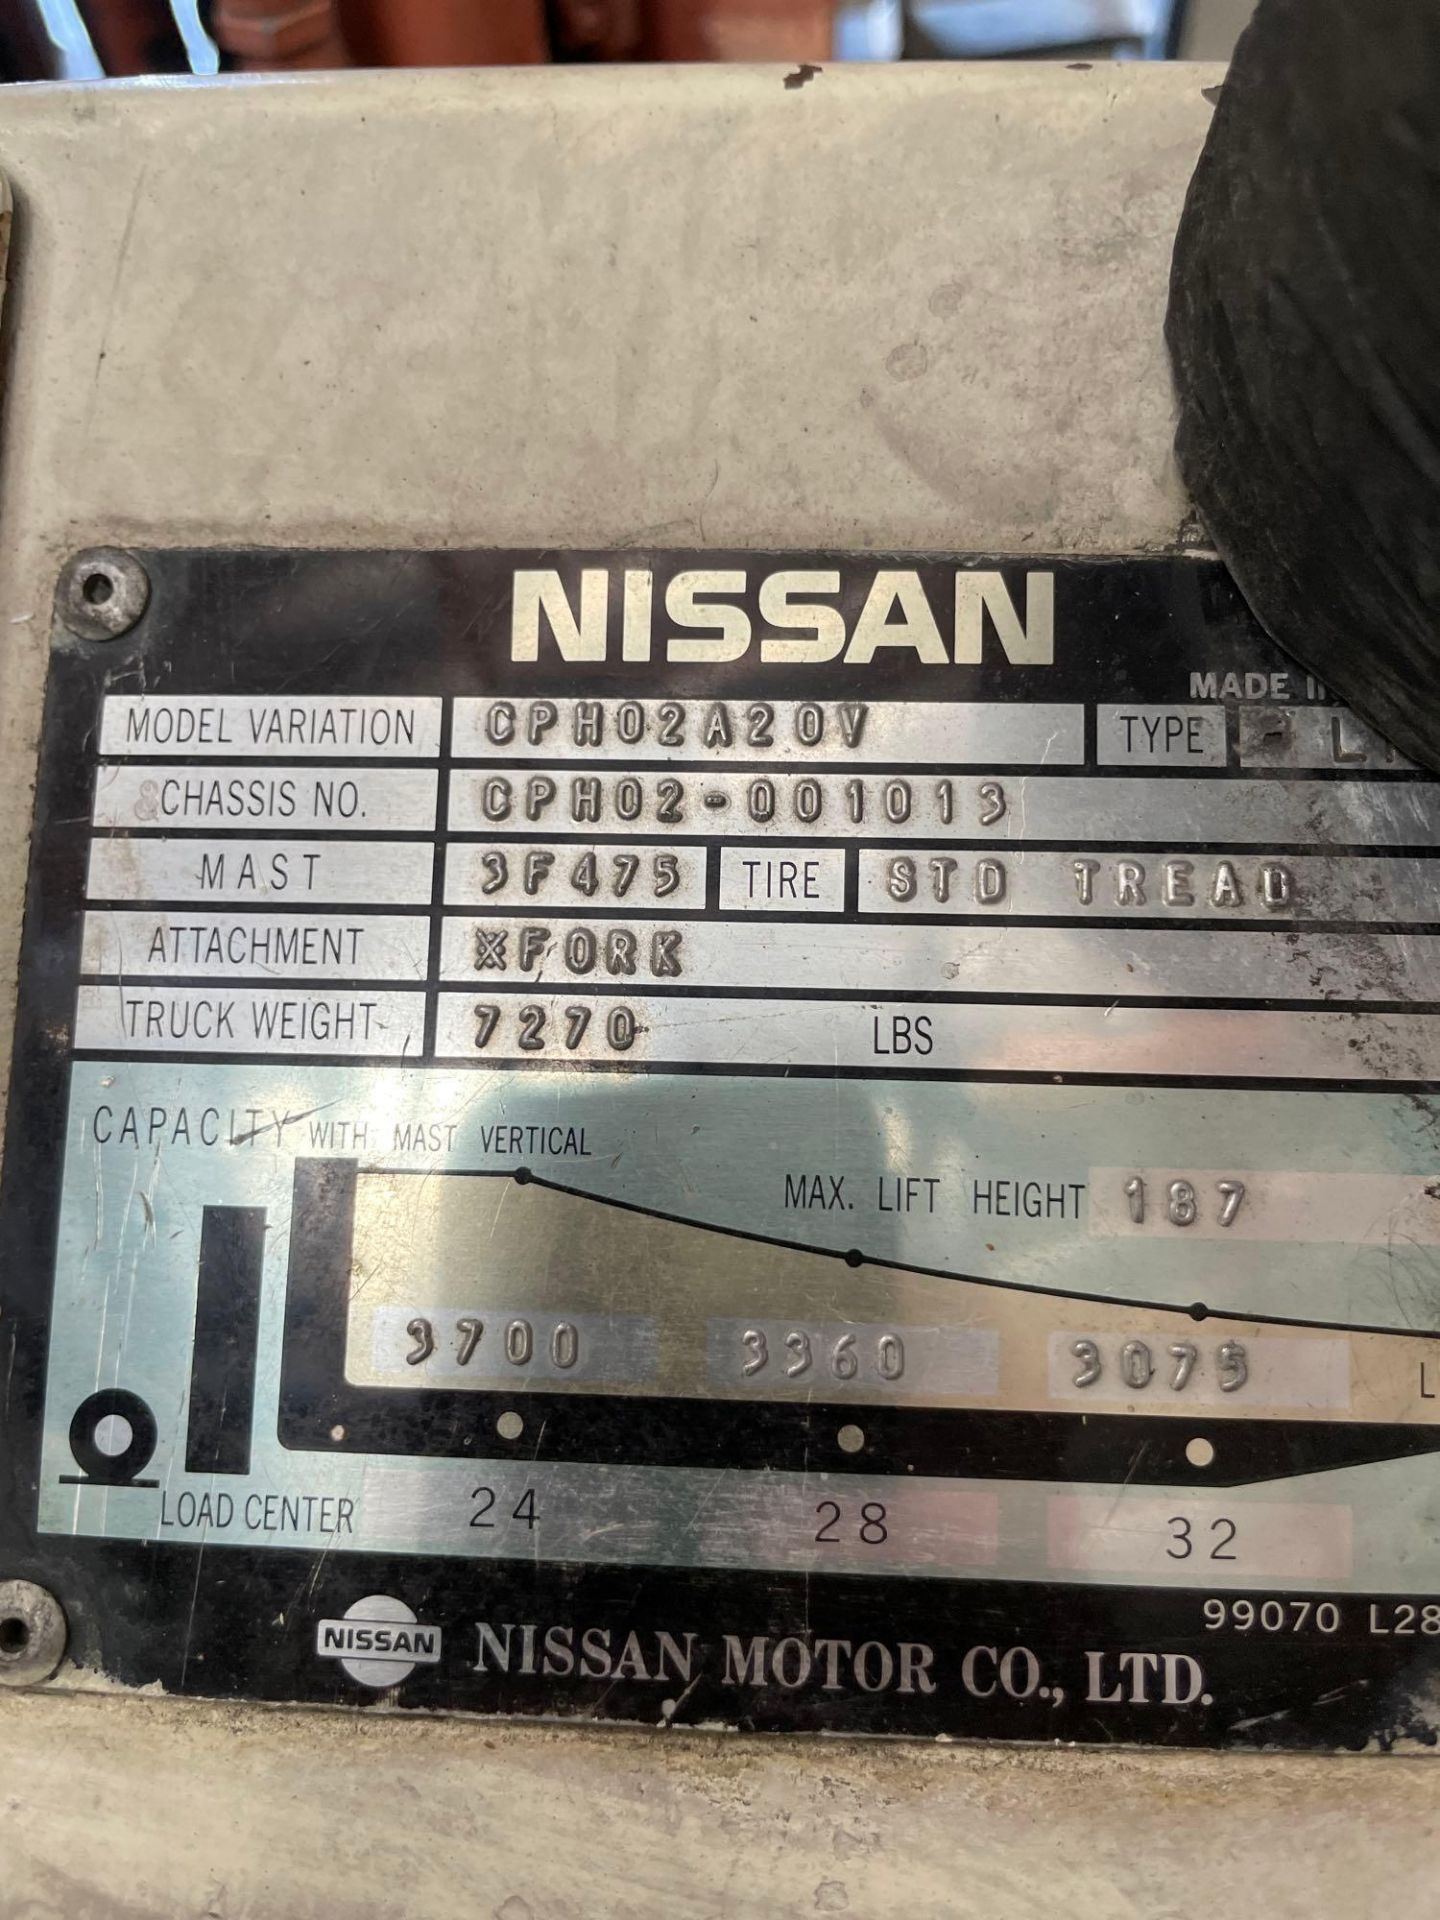 Nissan CPH02A20V 3700 Lbs. Lift Cap. Forklift, LPG, s/n CPH02-001019 - Image 7 of 7